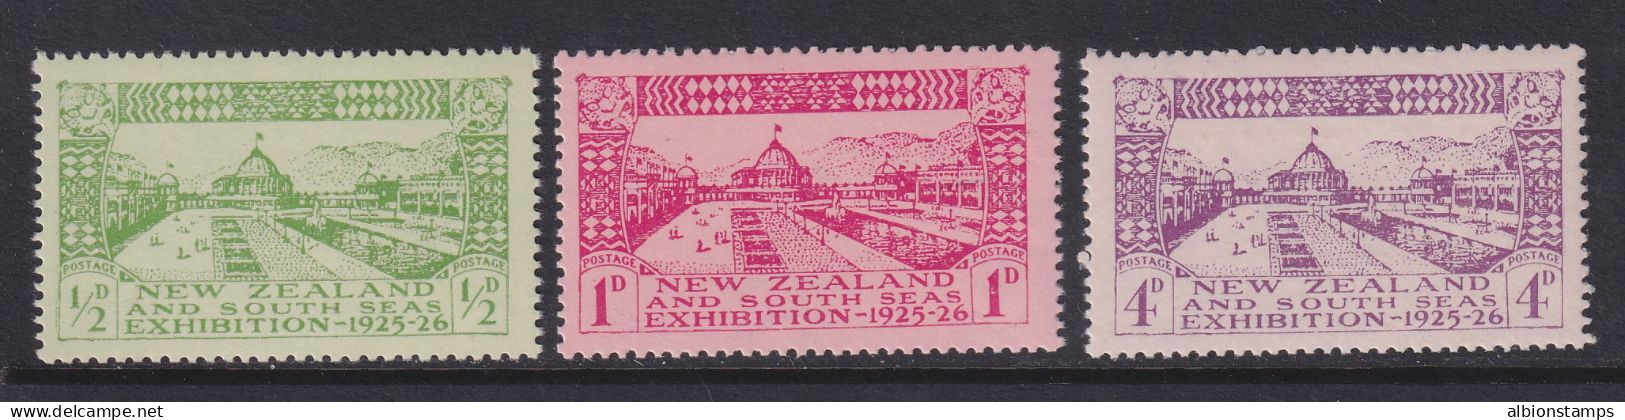 New Zealand, Scott 179-181 (SG 463-465), MNH - Nuevos